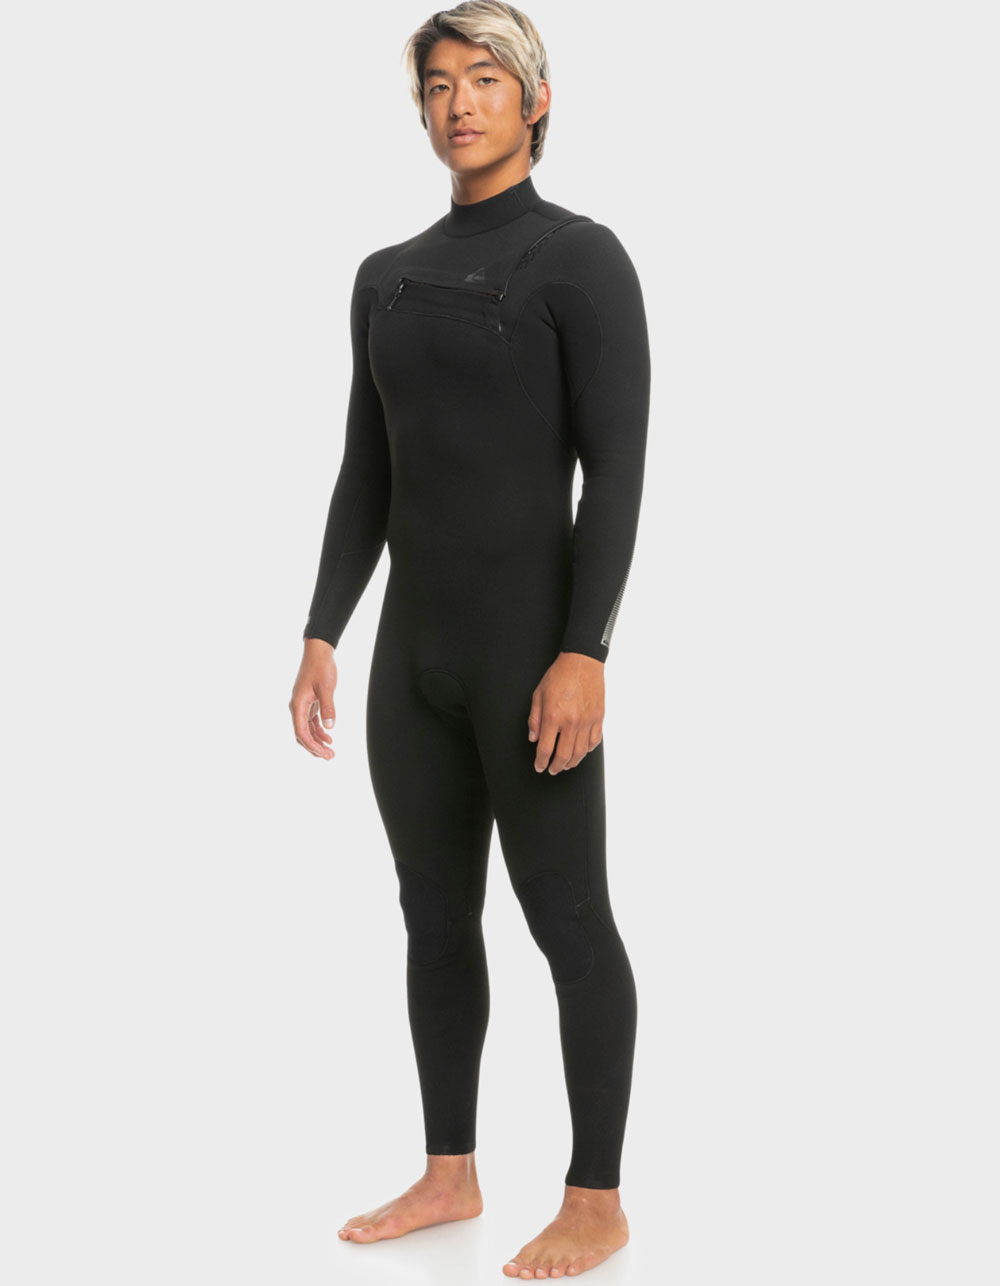 QUIKSILVER 3/2 Highline Chest Zip Mens Wetsuit - BLACK | Tillys